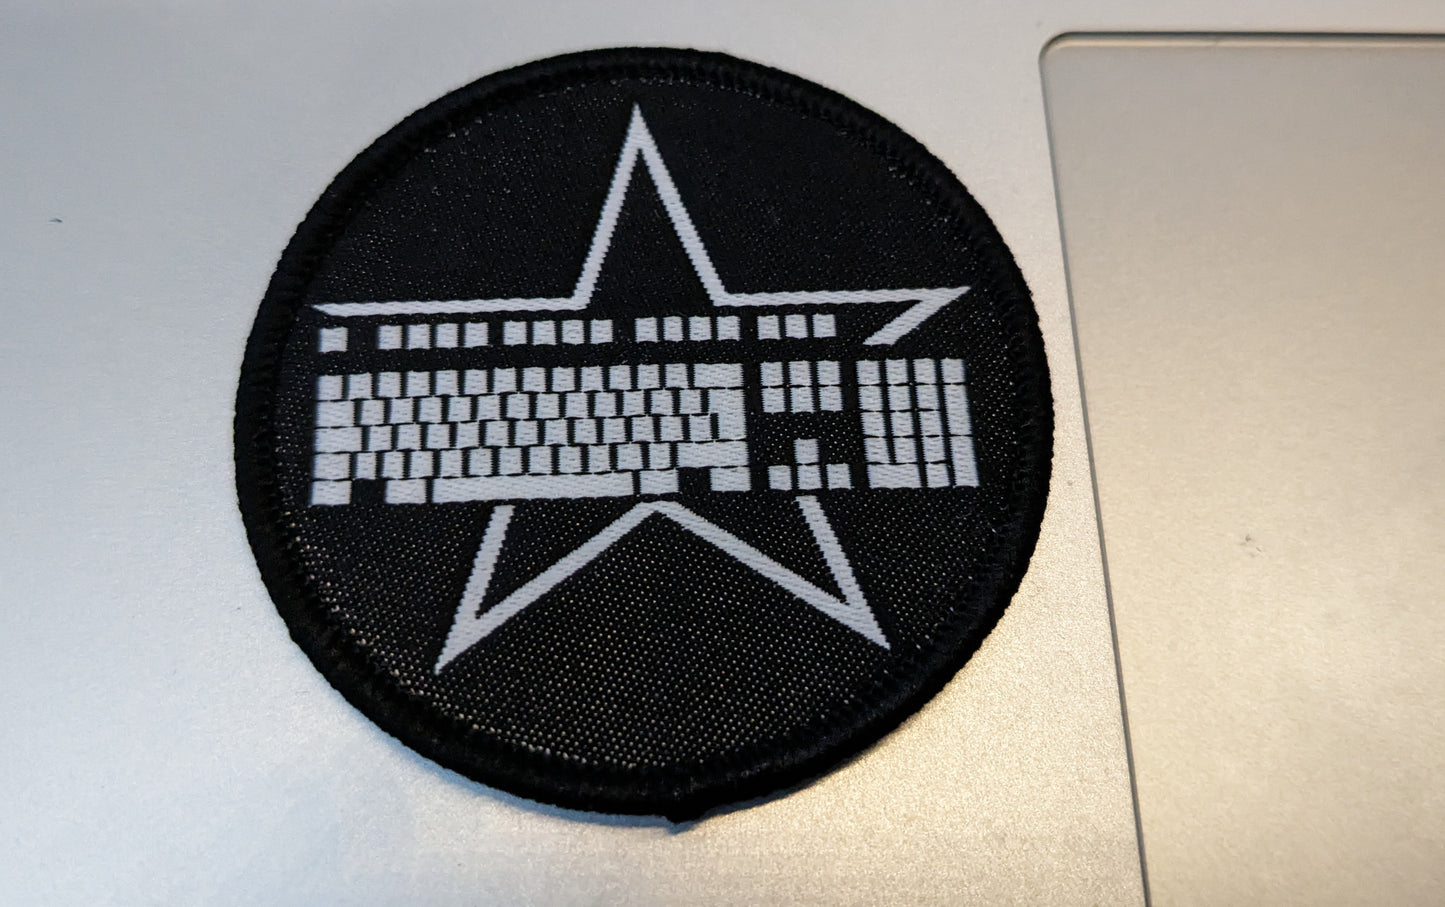 Keyboard-Star Patch